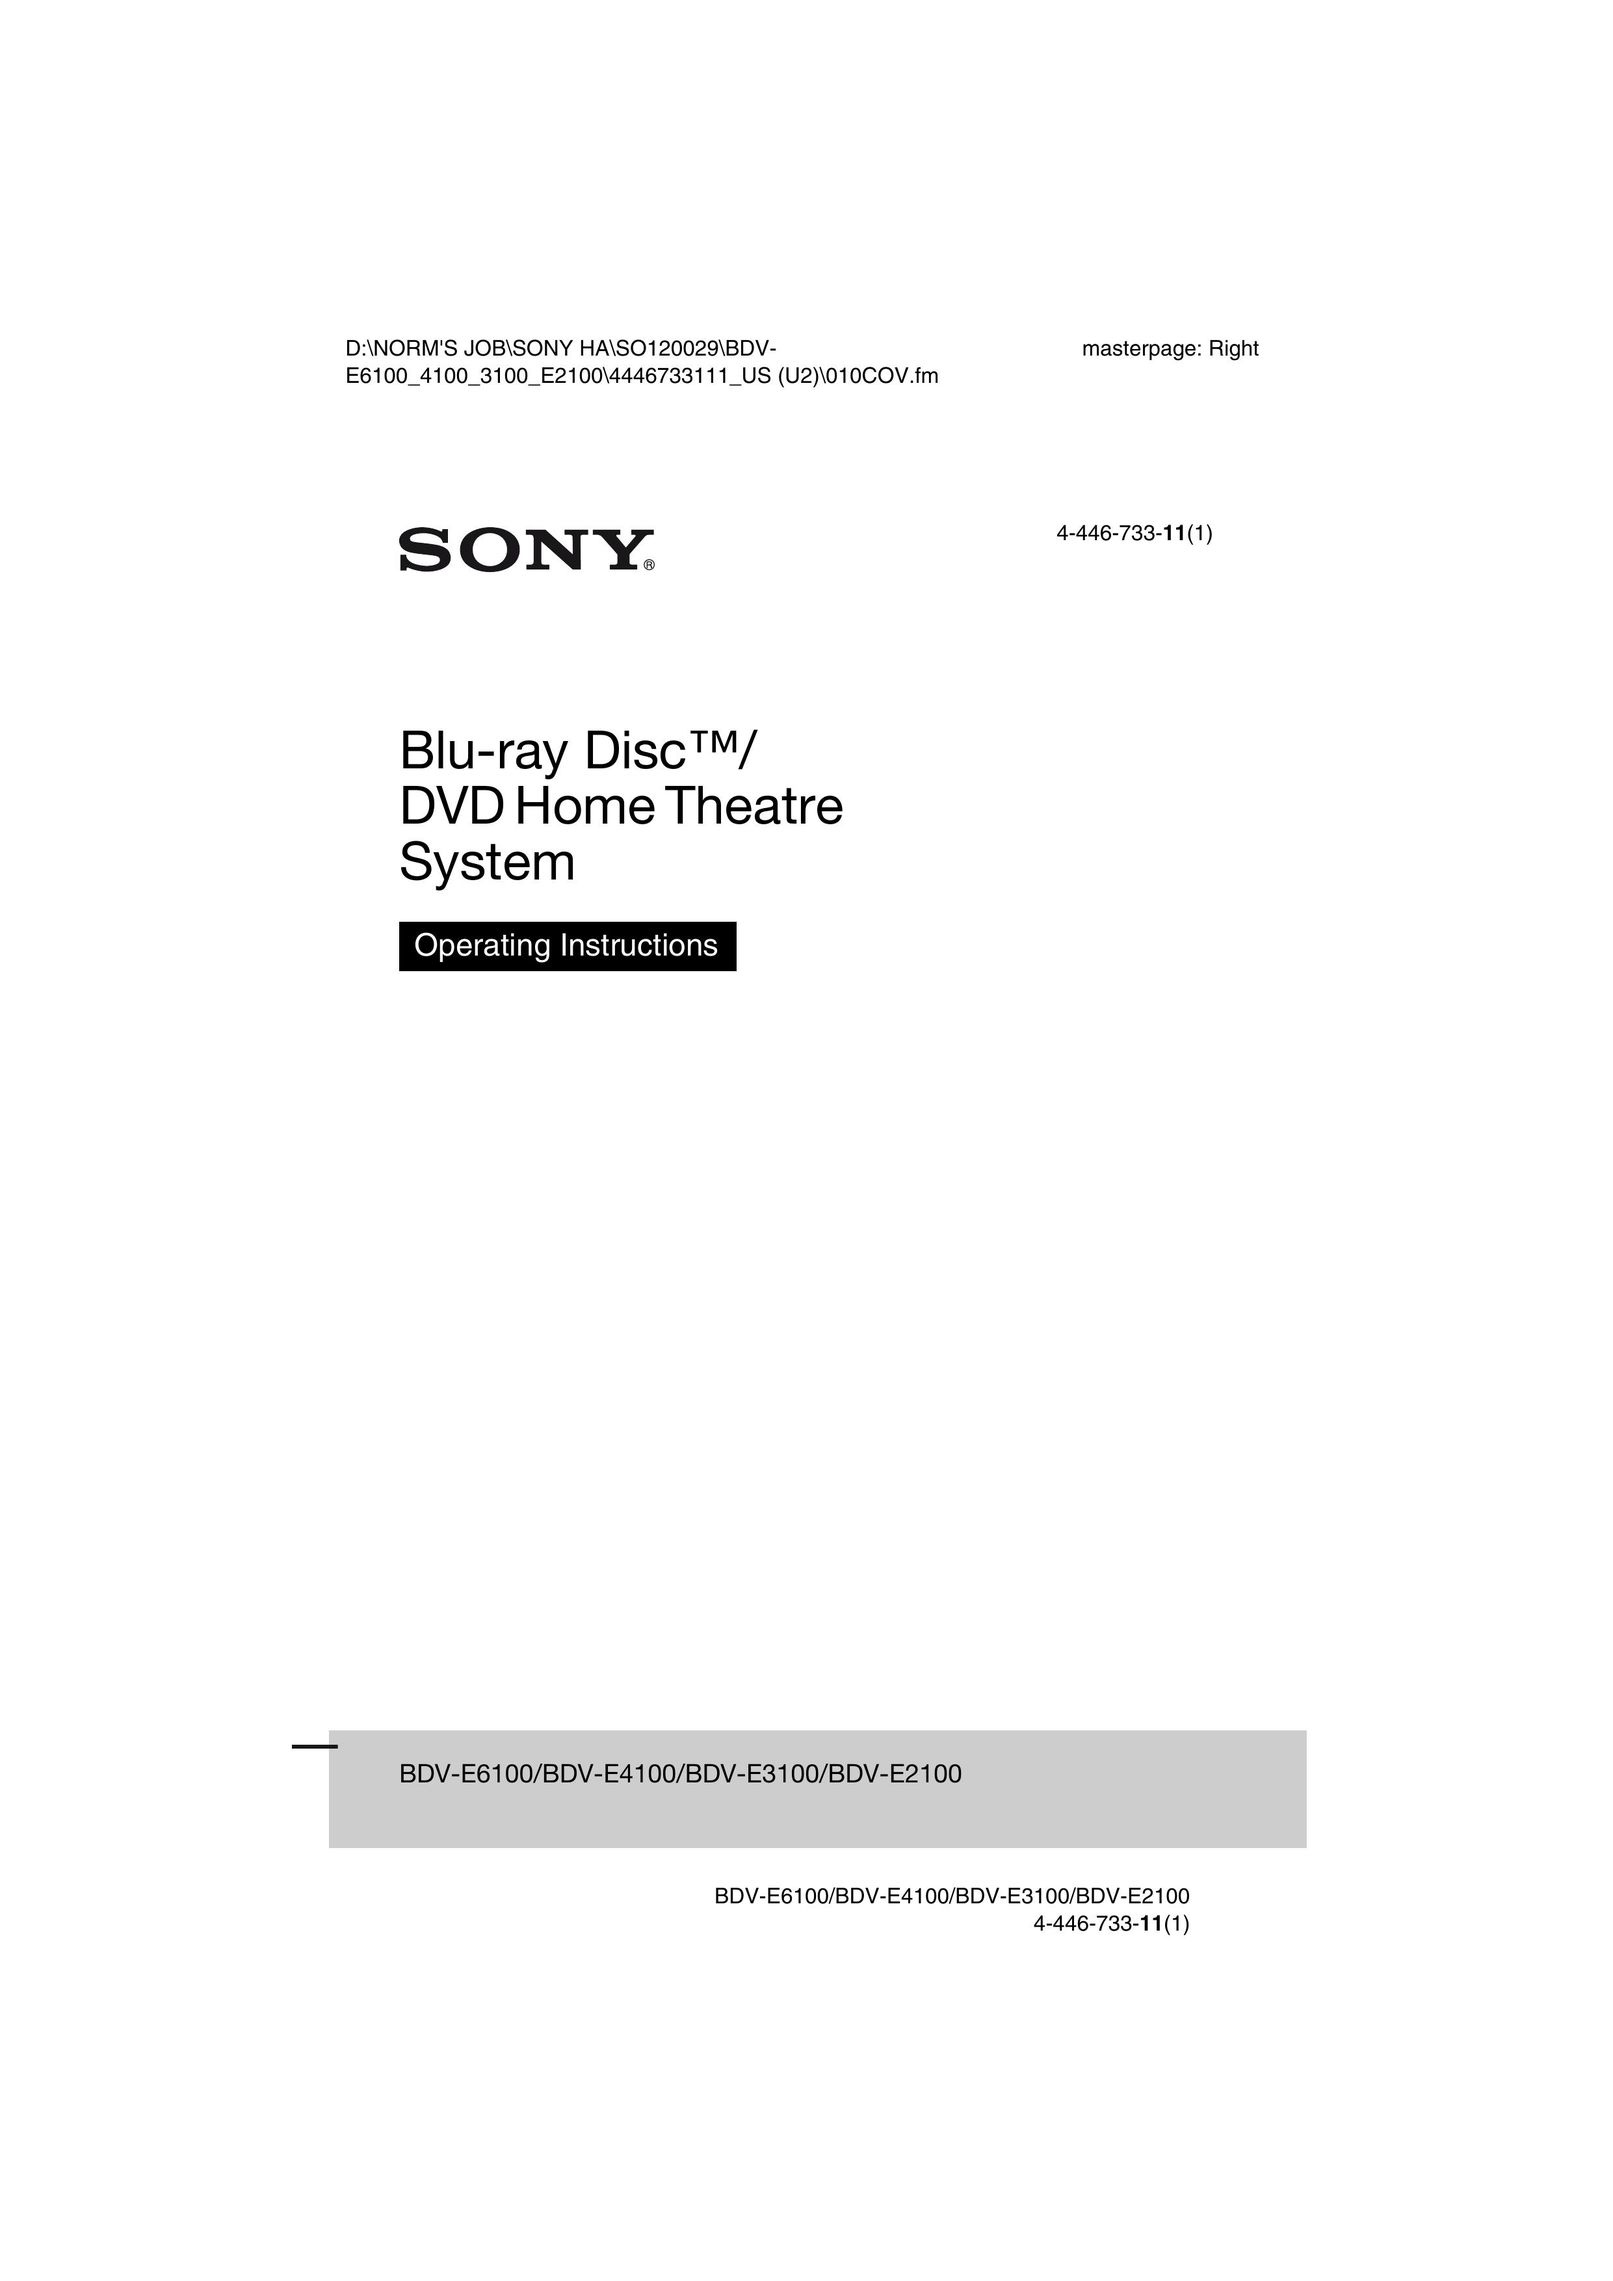 Sony BDV-E2100 Bluetooth Headset User Manual